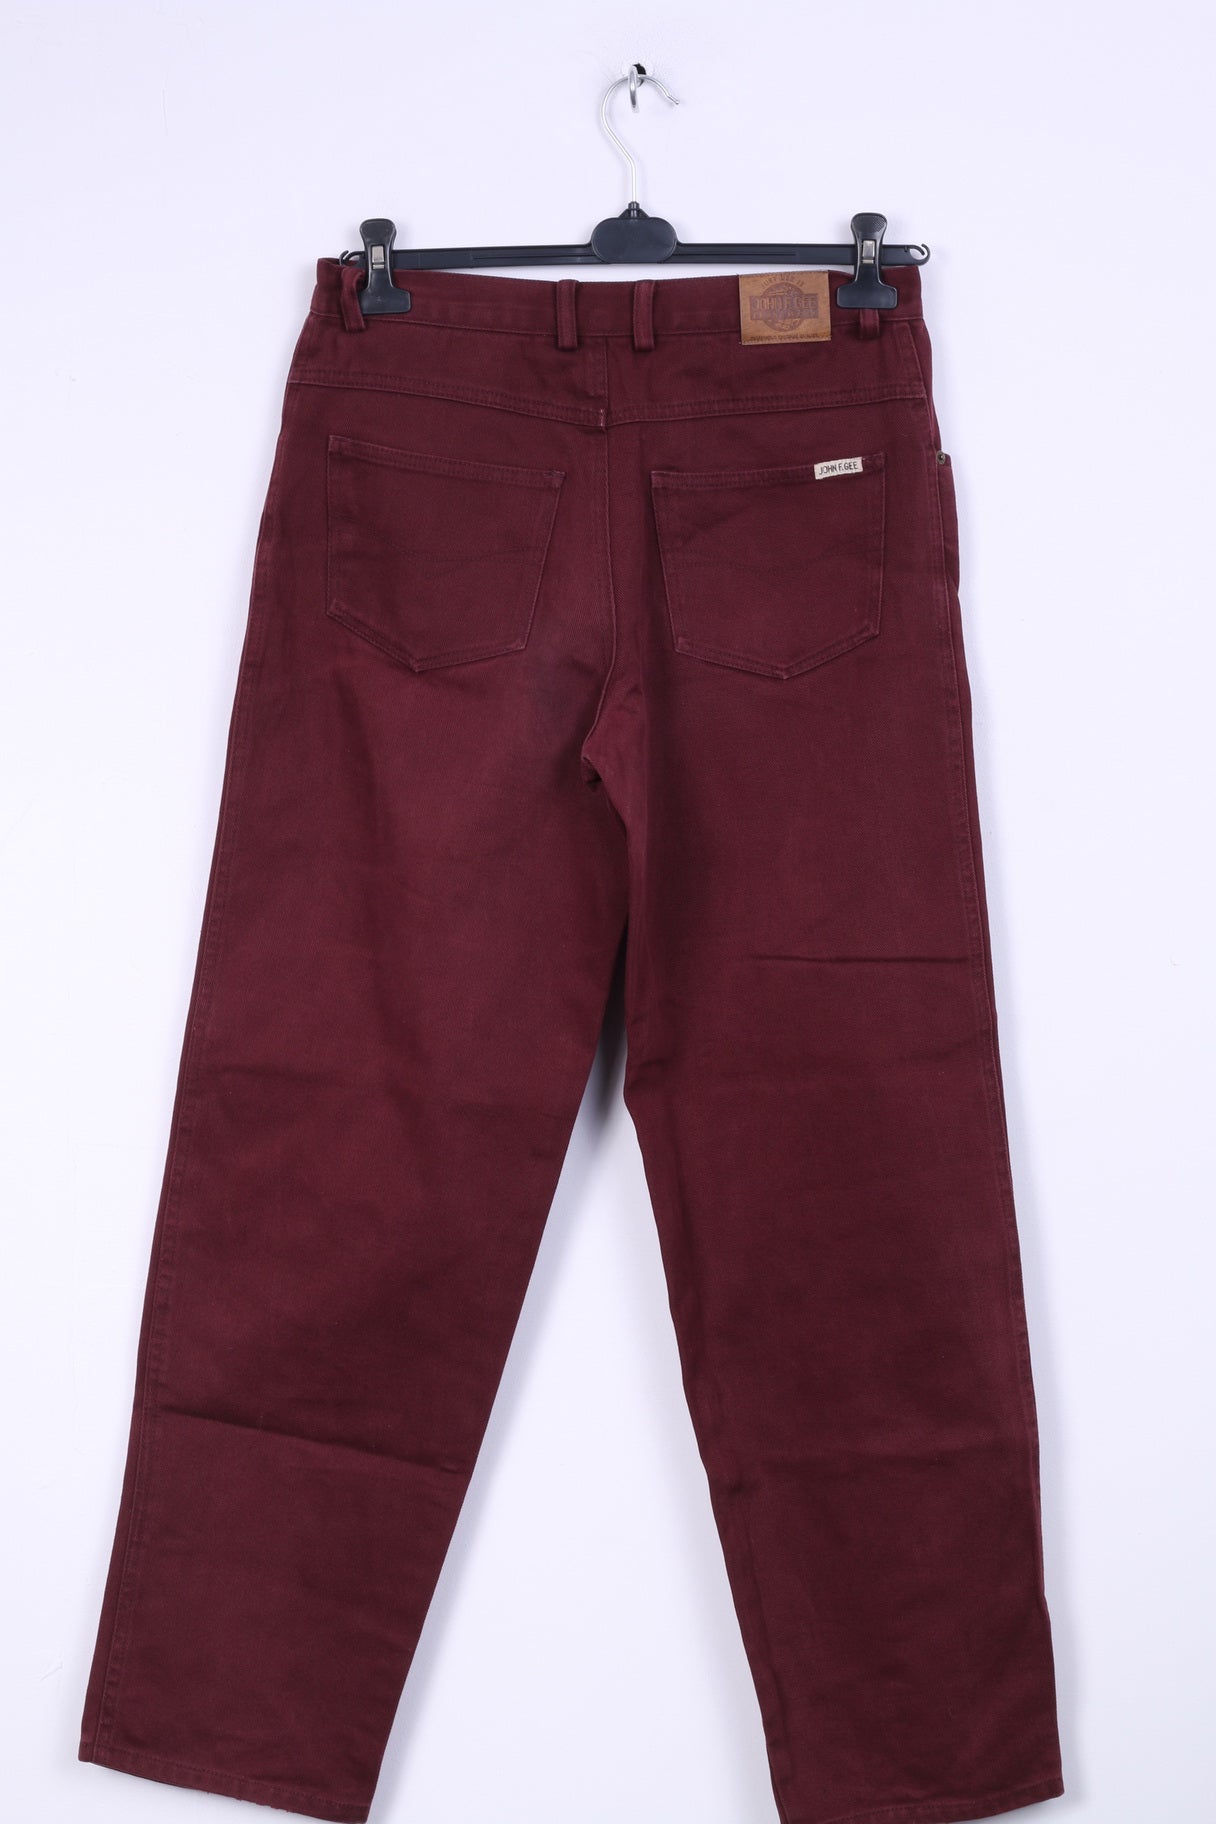 Pantaloni jeans John F.Gee 48 da uomo Pantaloni a gamba dritta in cotone bordeaux